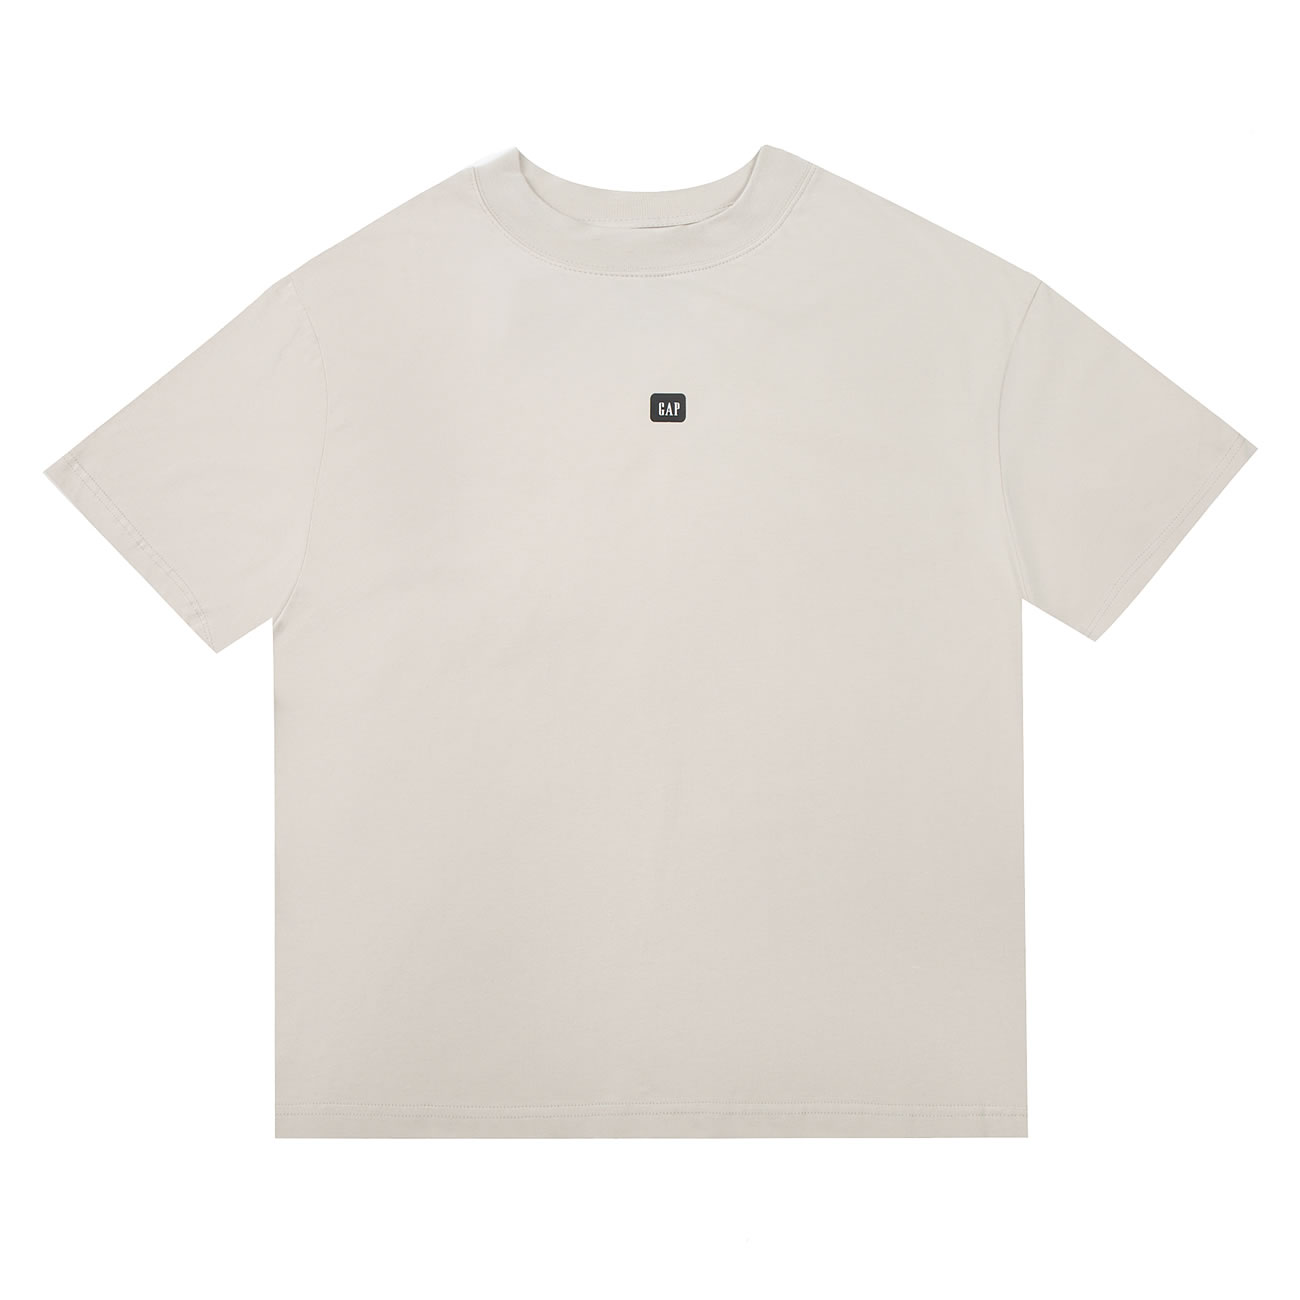 Kanye New T Shirts For Sale White (1) - newkick.org